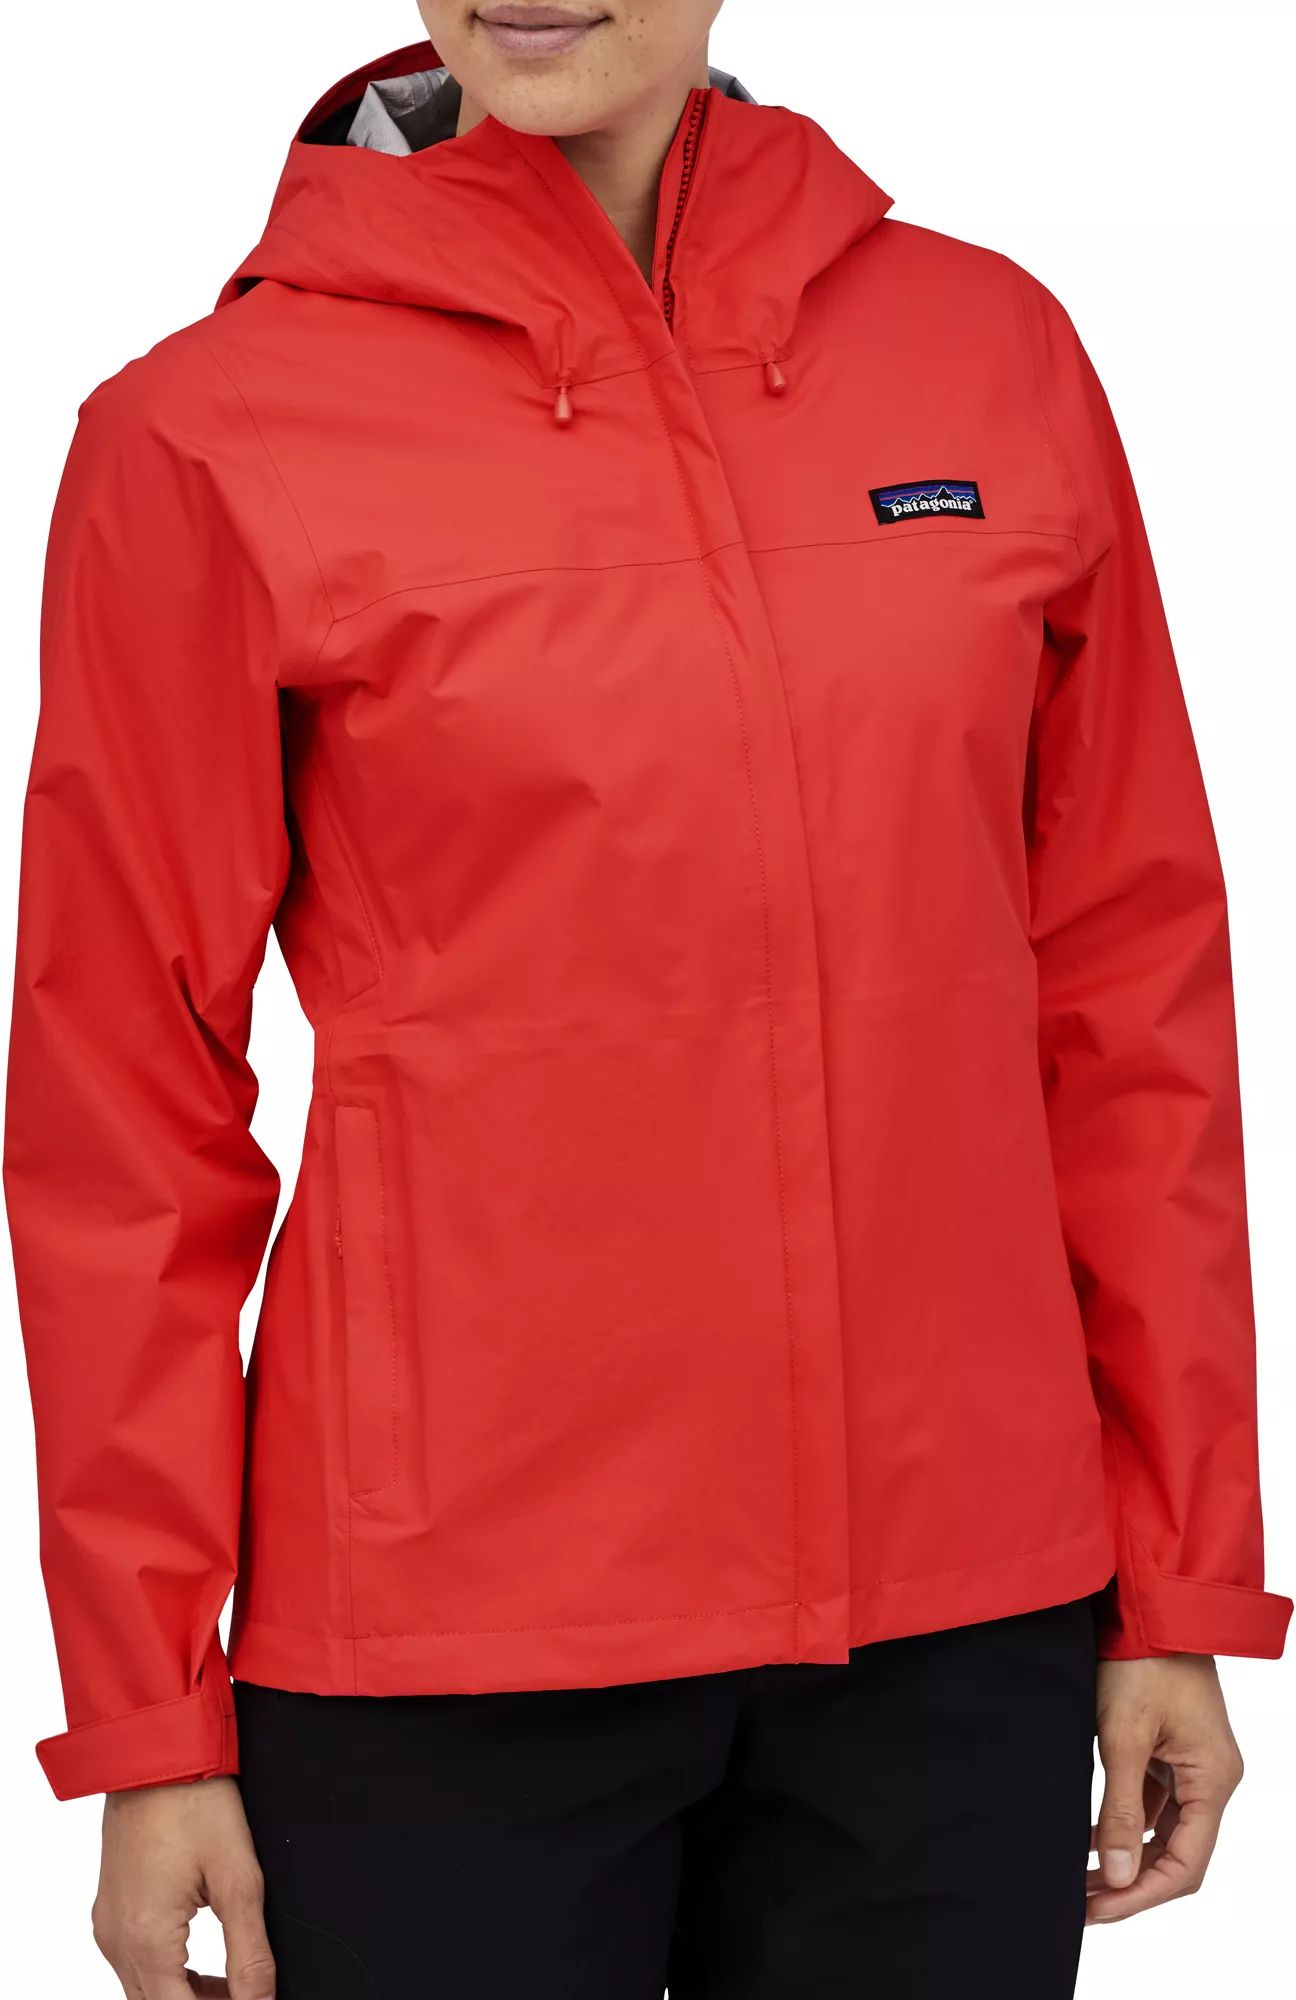 Patagonia Women's Torrentshell 3L Rain Jacket, XS, Catalan Coral | Dick's Sporting Goods